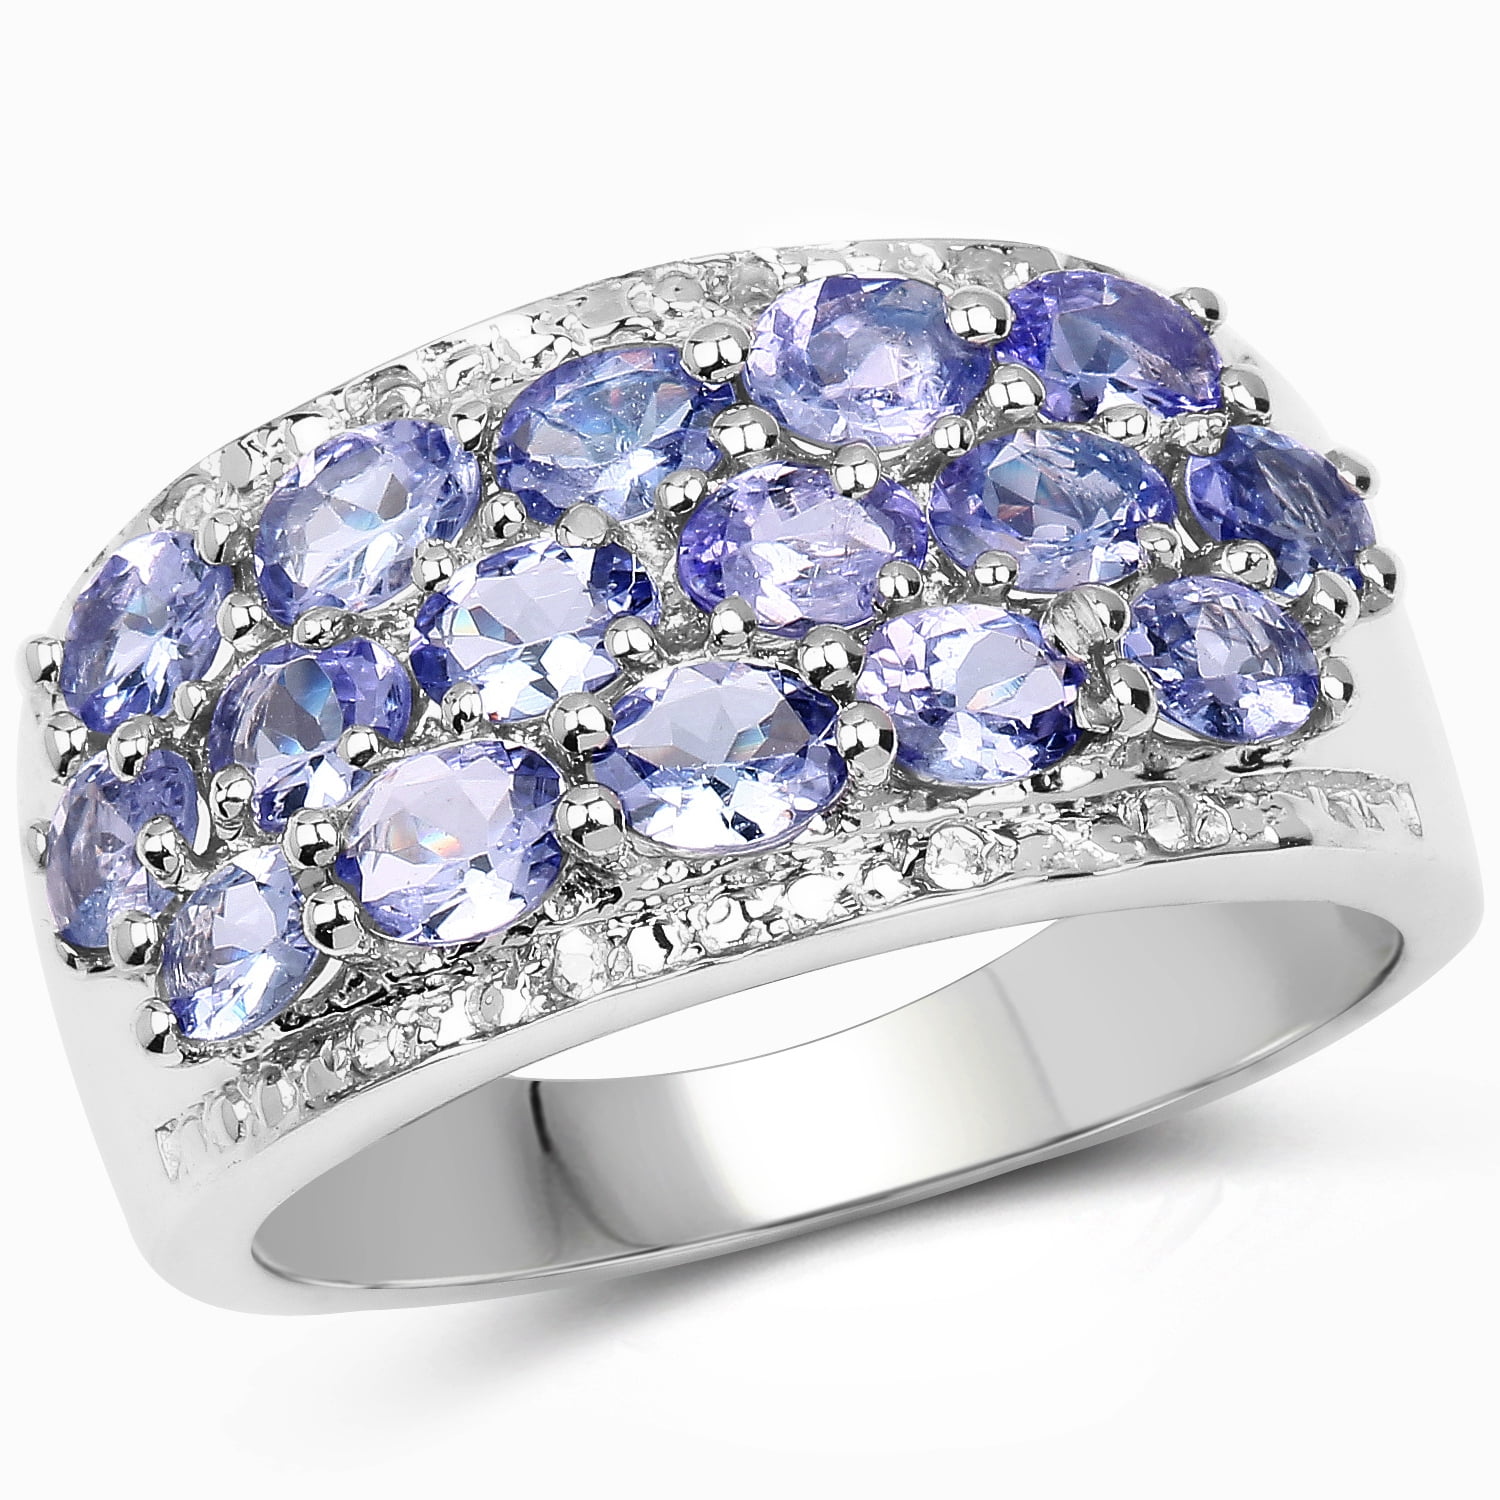 Sinlifu Triangle Shape Blue Opal 925 Silver Ring